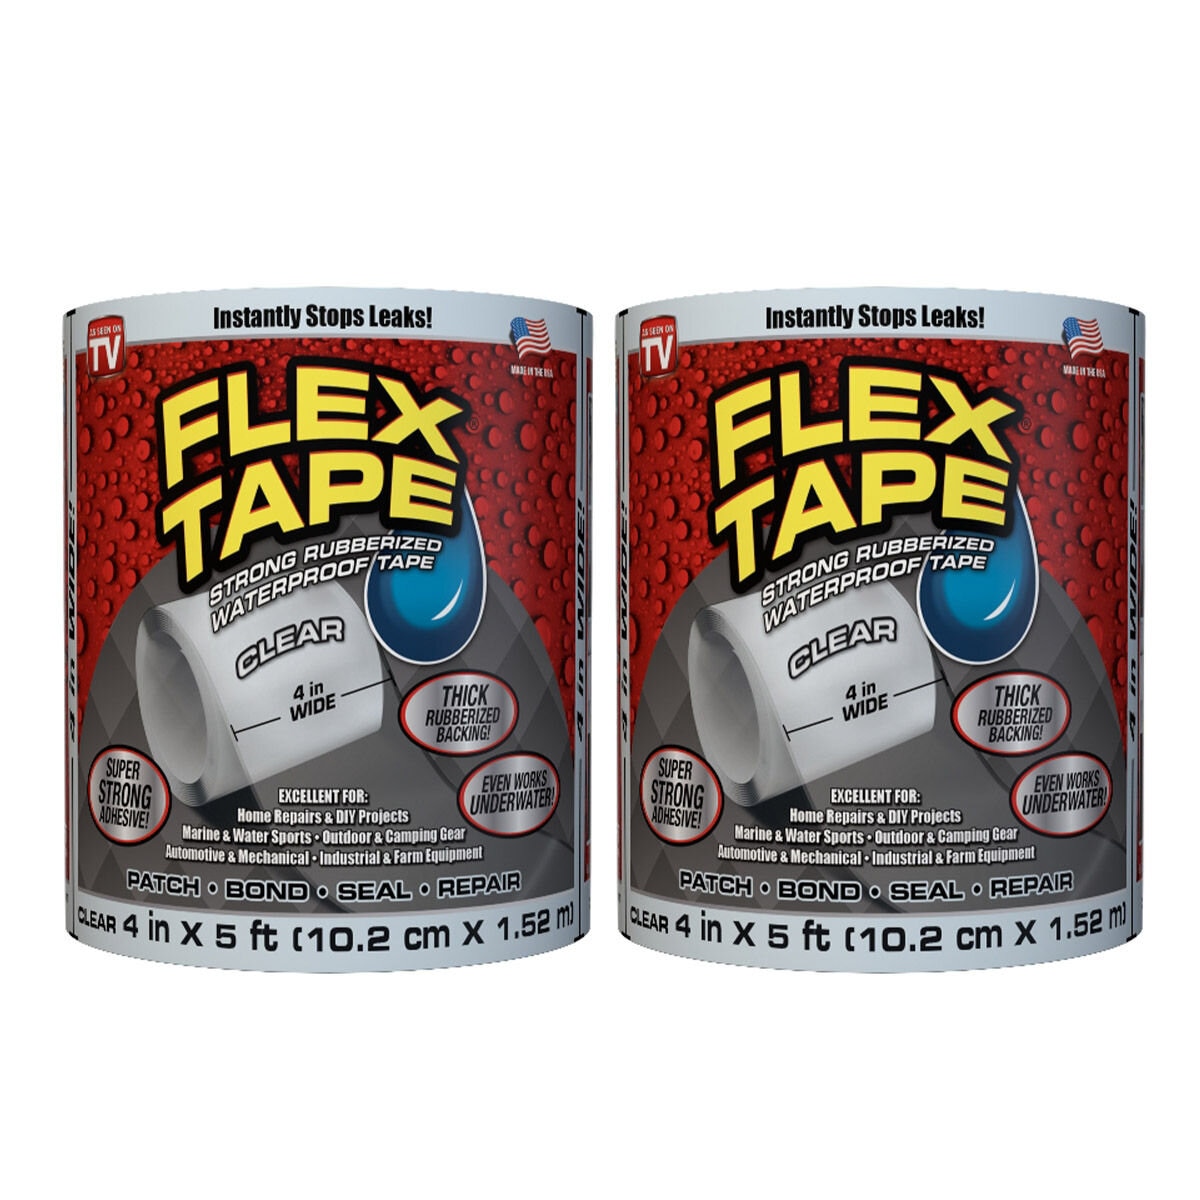 FLEX TAPE 強固修補膠帶 2入 透明